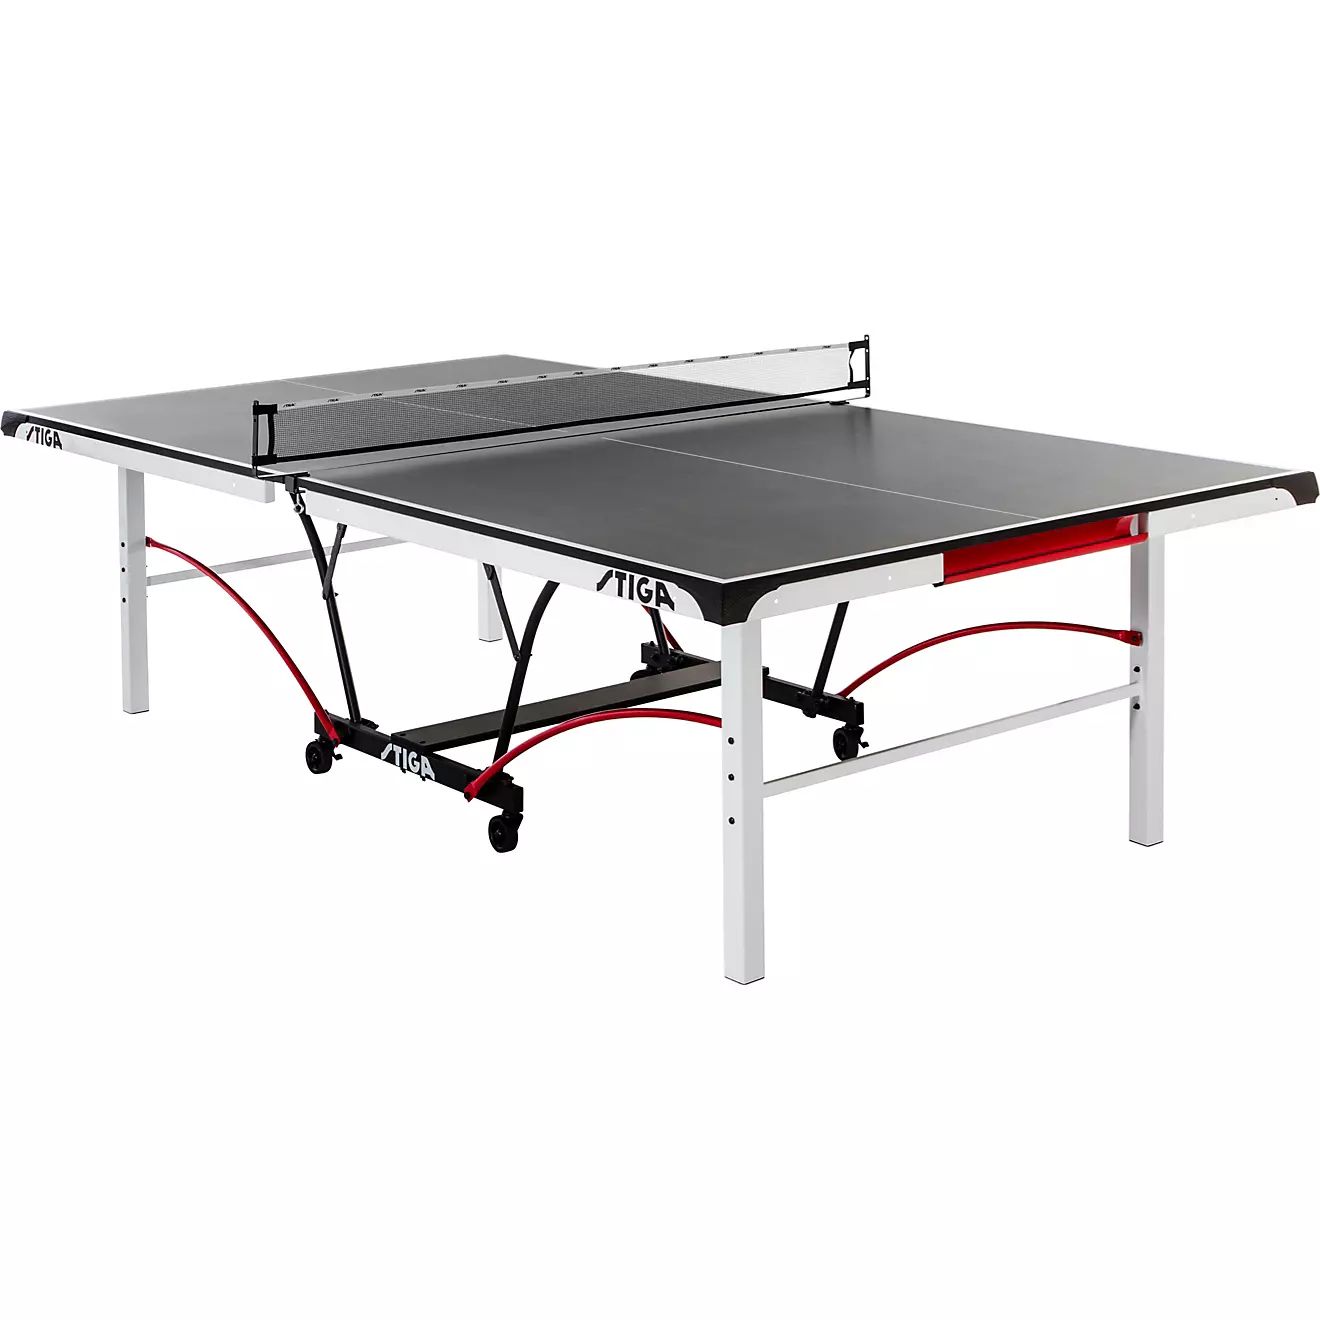 STIGA 3100 Premier Table Tennis Table | Academy Sports + Outdoors